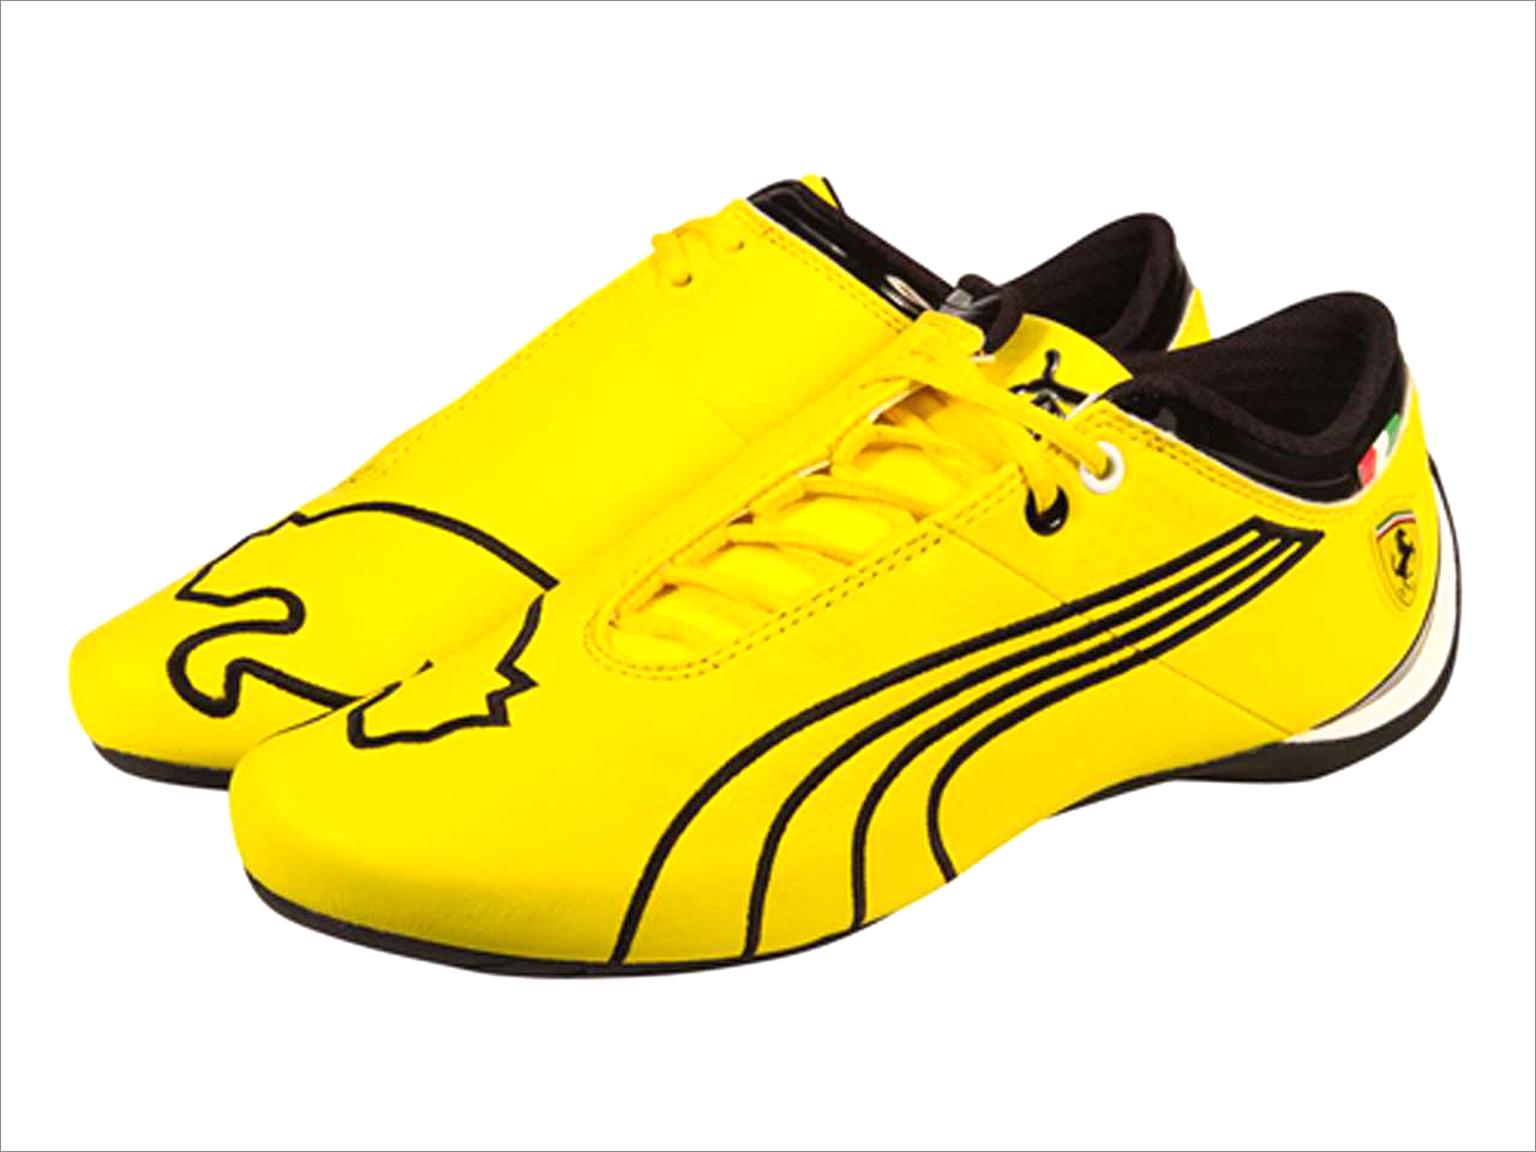 puma ferrari yellow shoes